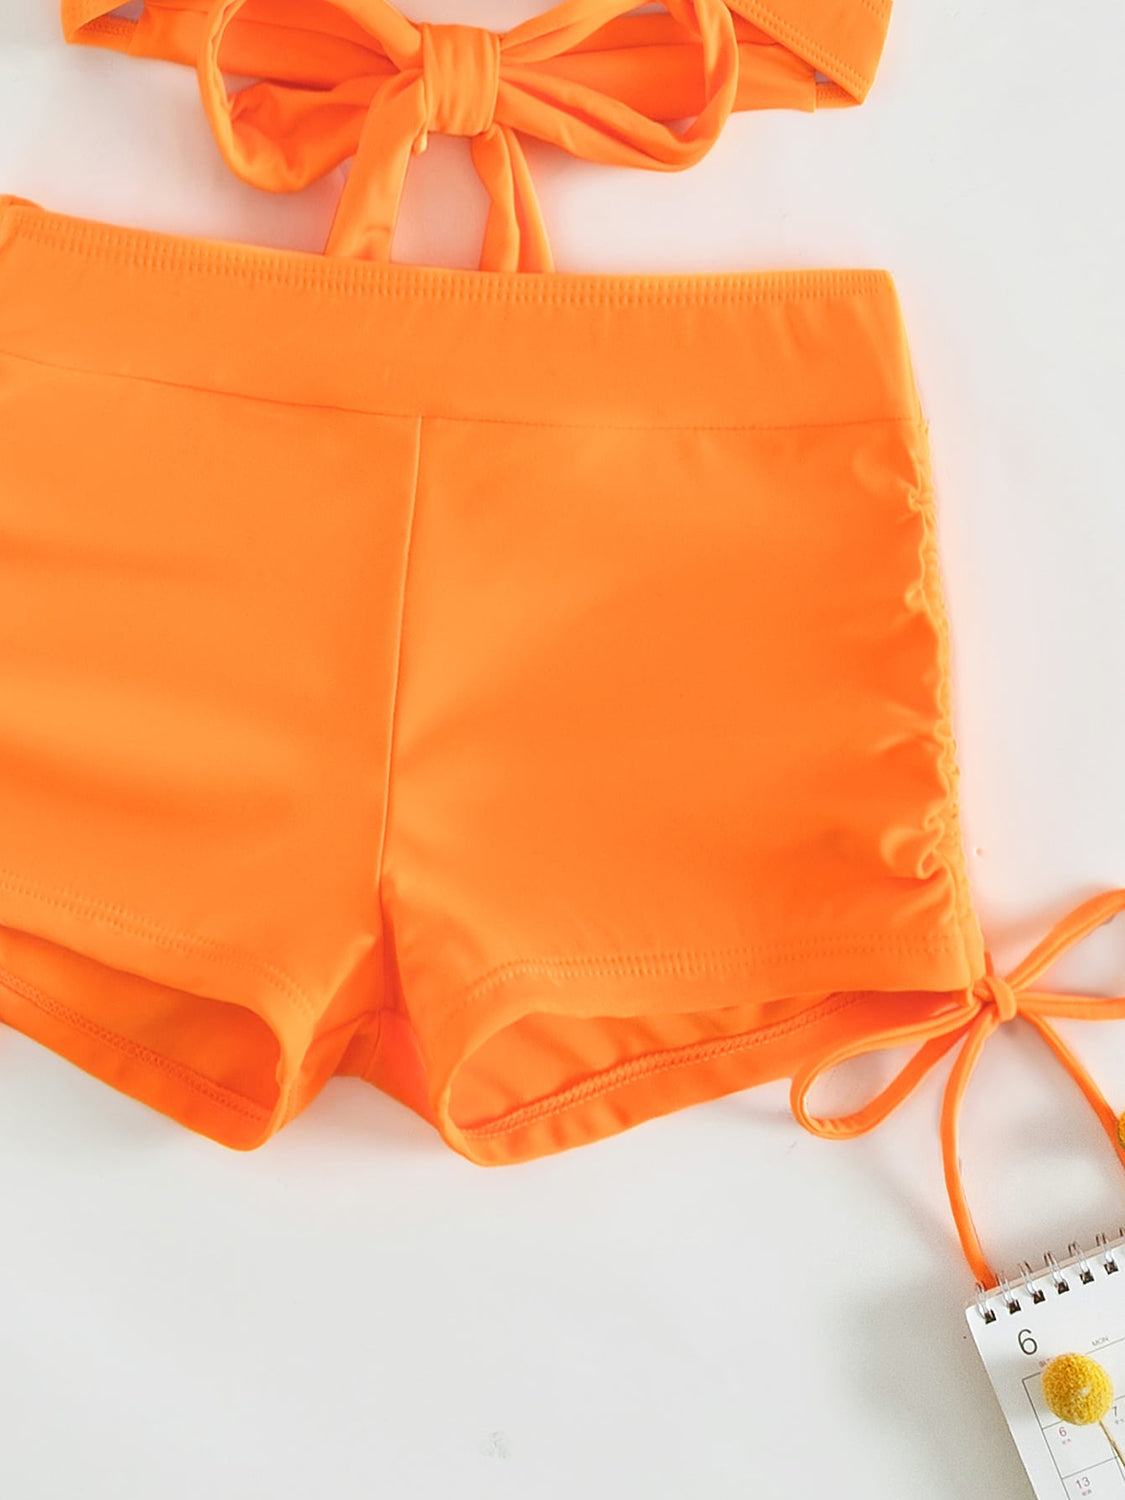 a pair of orange shorts with a tie around the waist